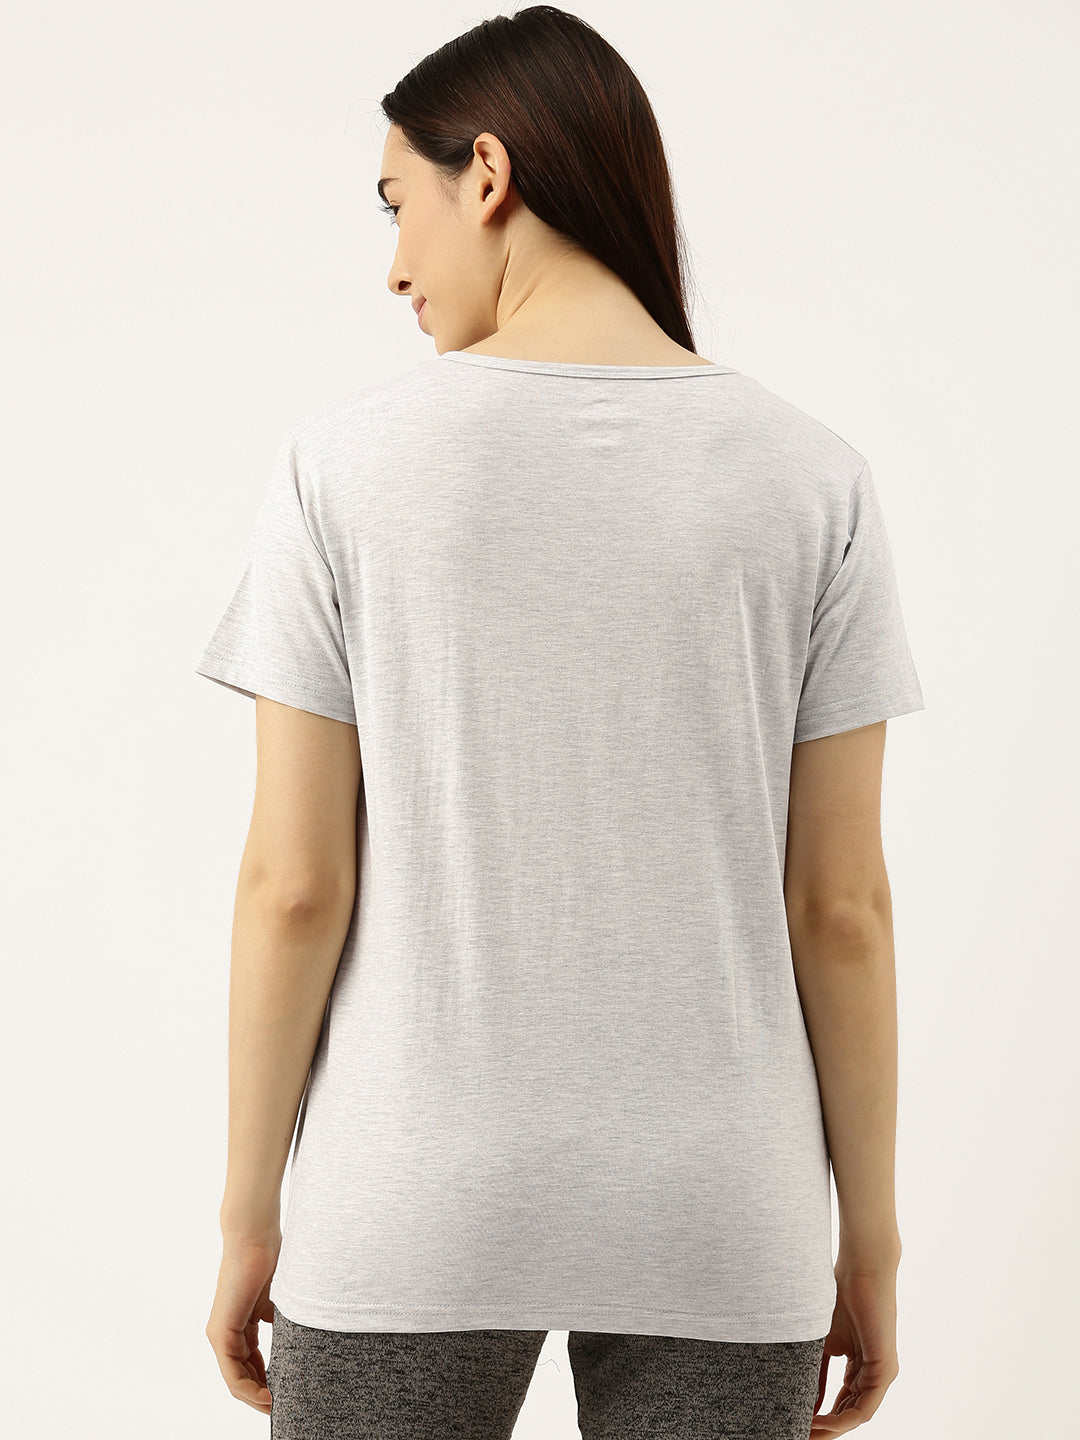 T998 Women Printed Cotton T-shirt - Clt.s